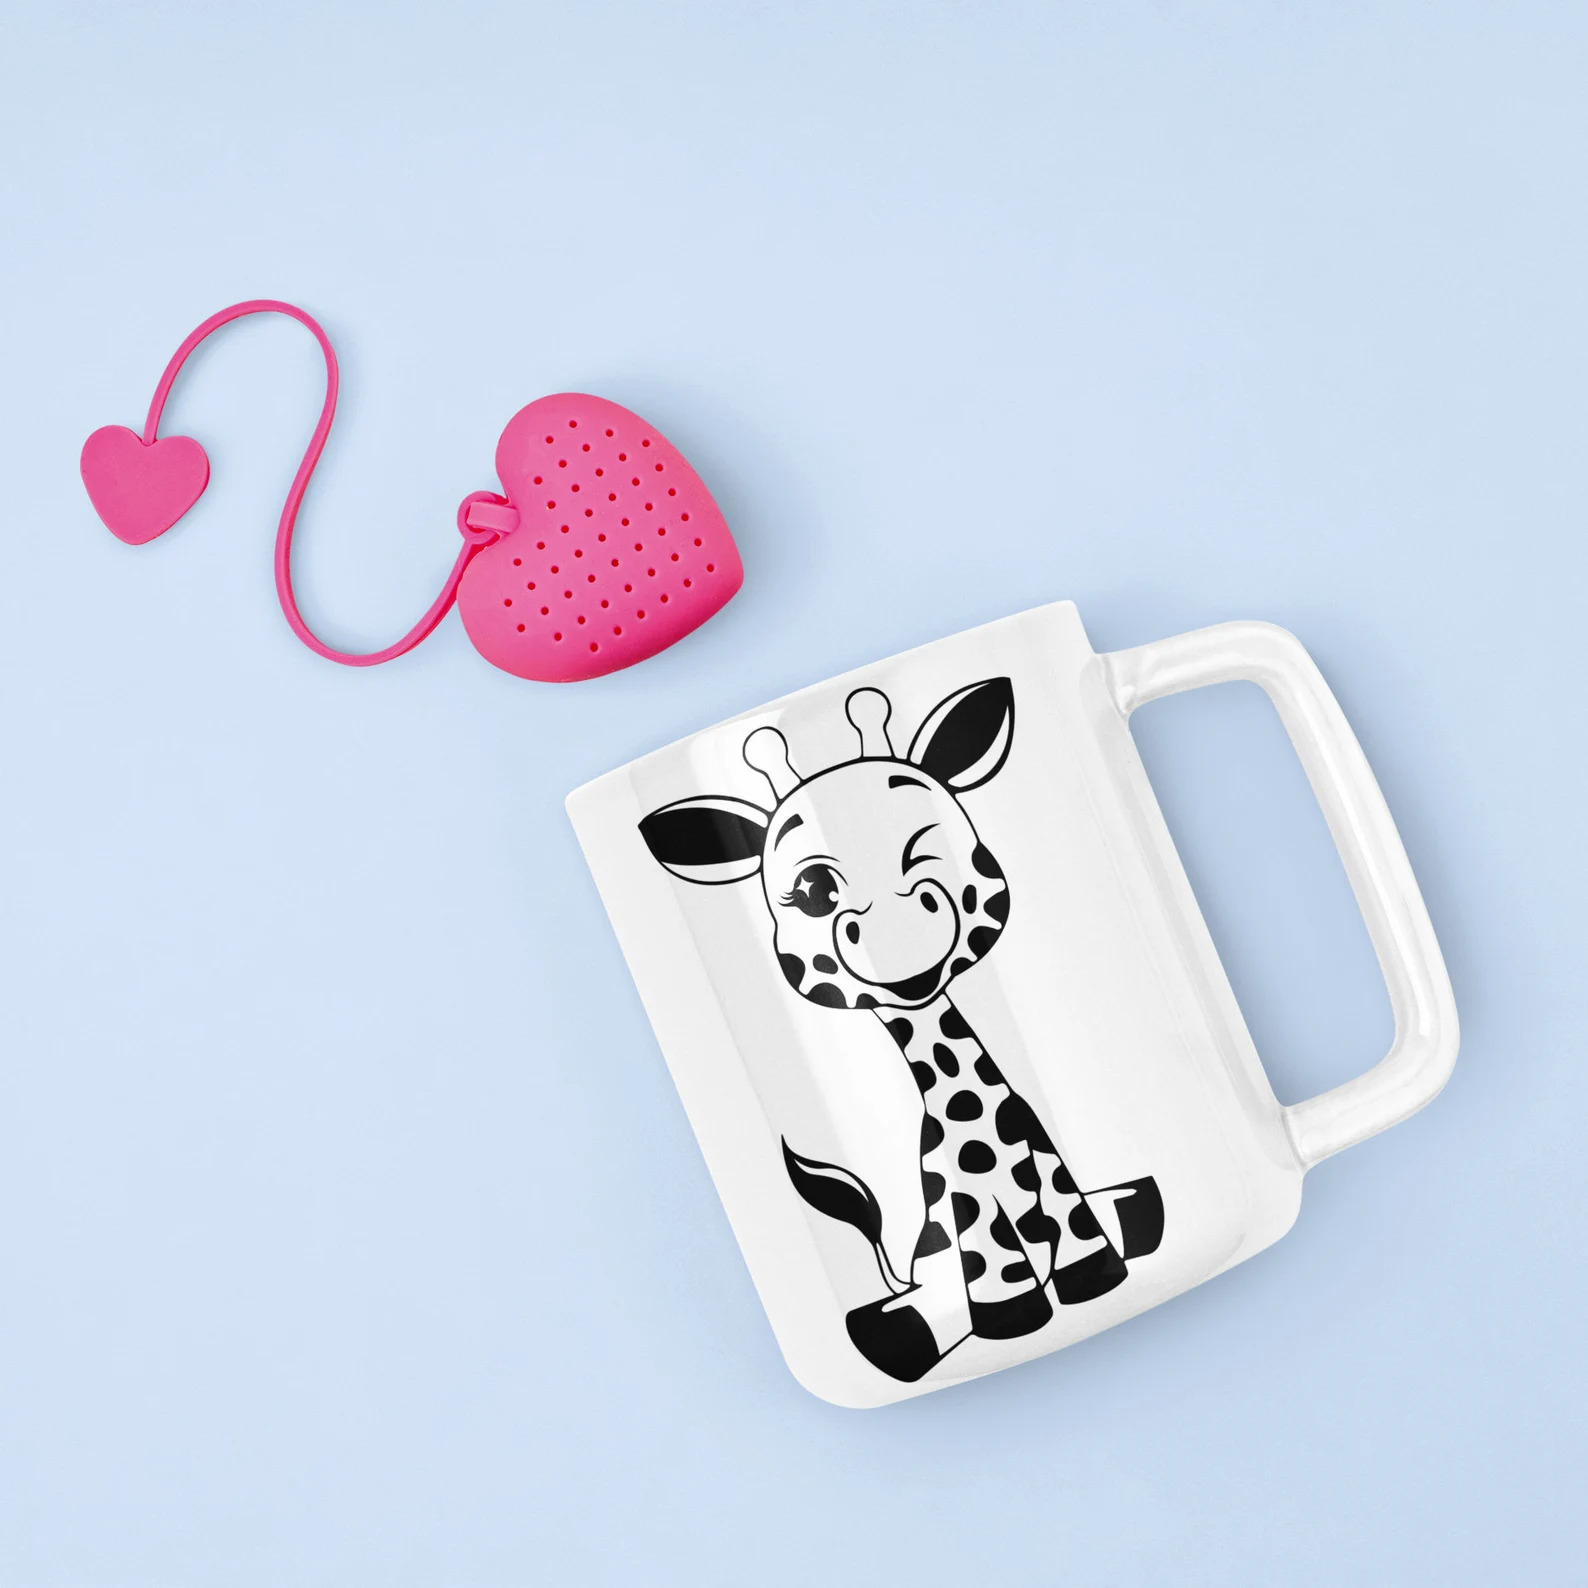 Ceramic mug with a giraffe design on it.